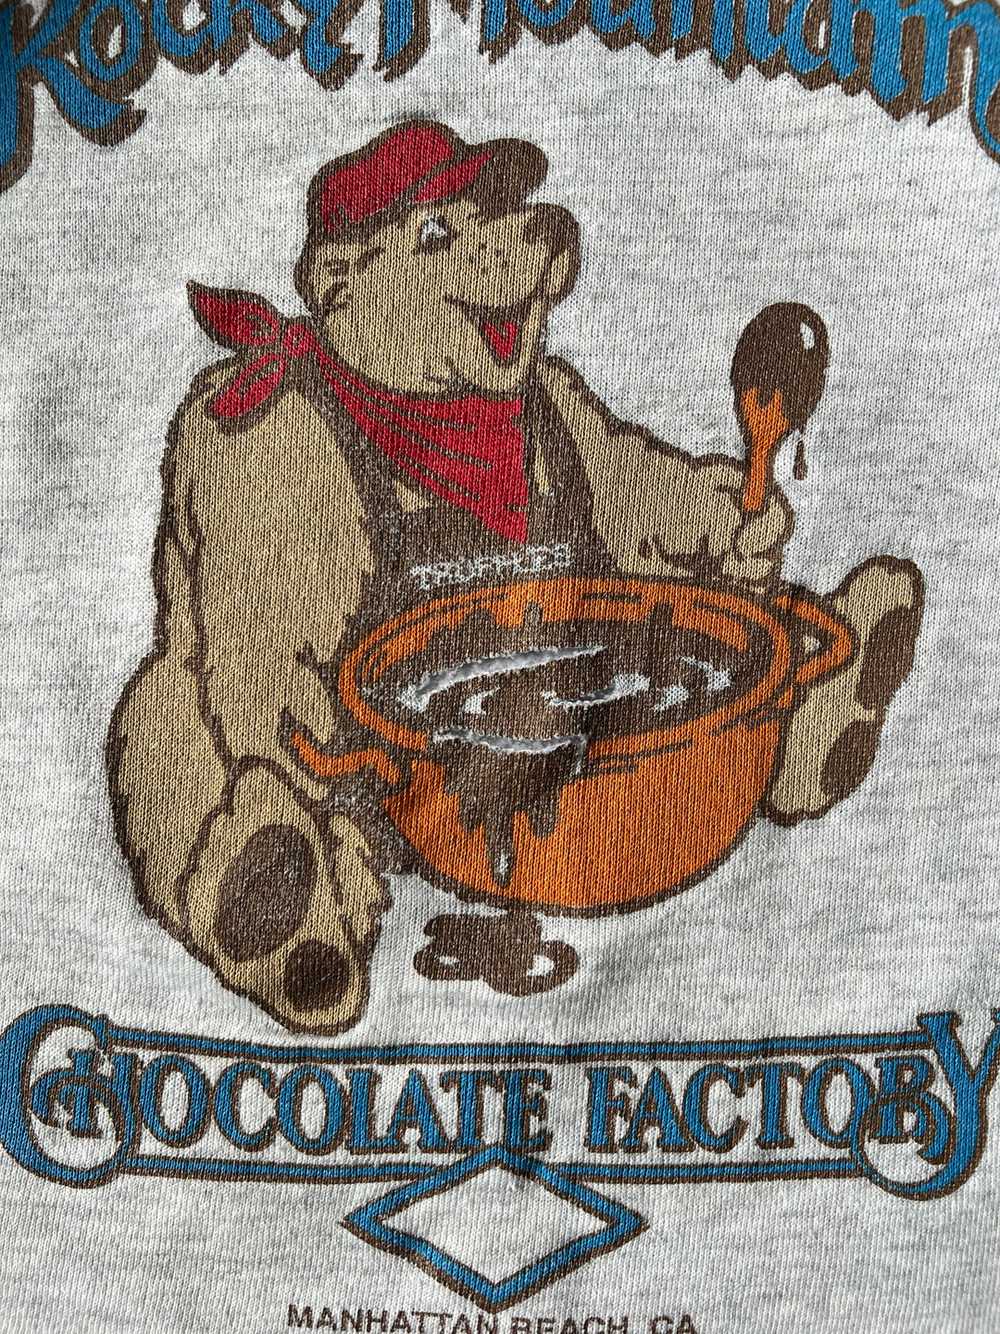 1990s Hanes Chocolate Factory Crewneck Sweatshirt - image 3